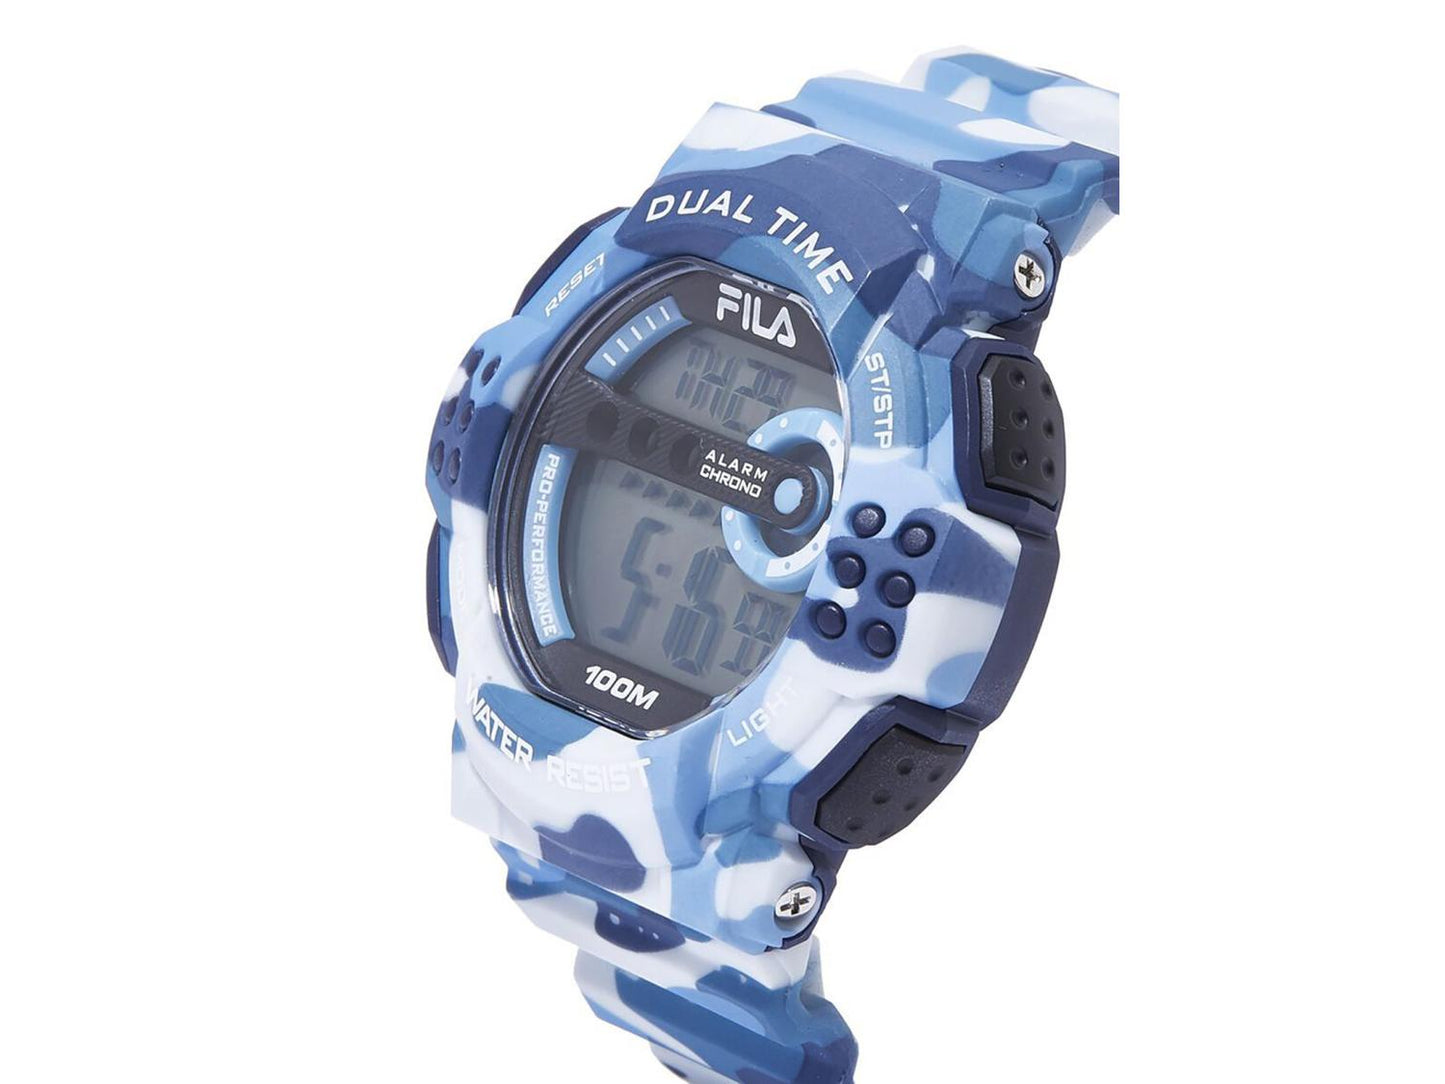 Reloj FILA 38-171-001 FILACTIVE Dual-Time-Azul